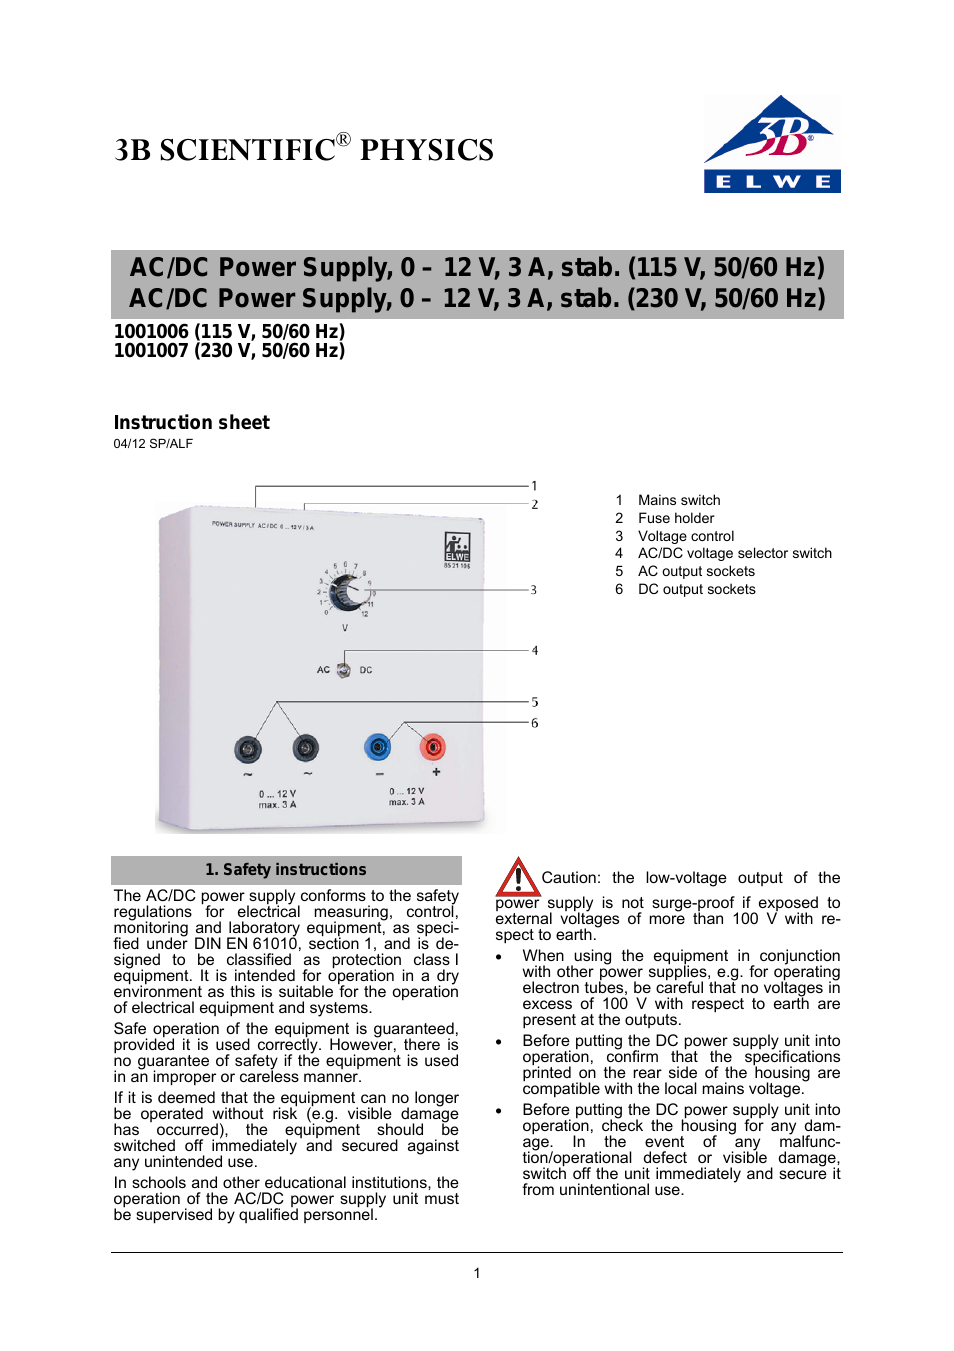 AC__DC Power Supply (Stabilized) 0-12 V, 3 A (115 V, 50__60 Hz)